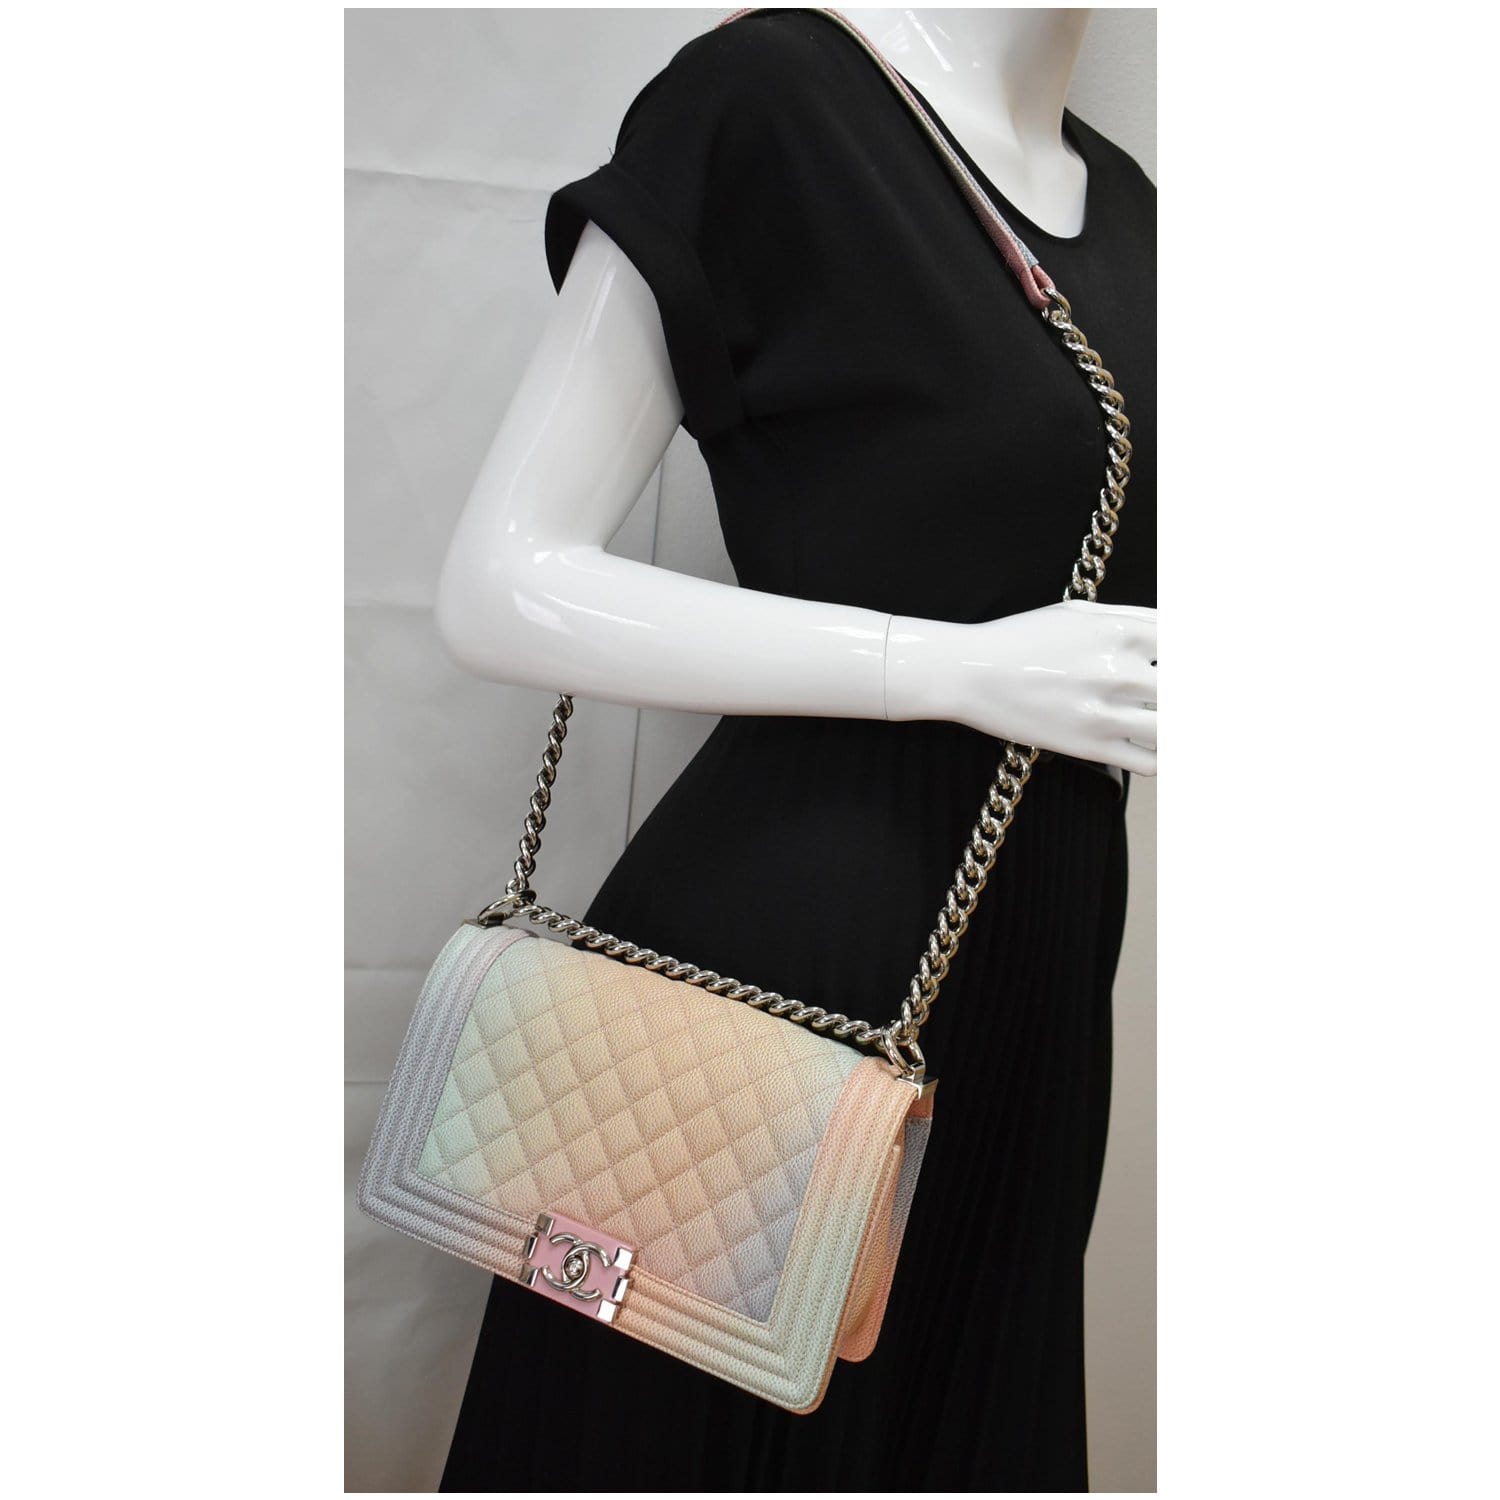 Chanel White Quilted Lambskin Rainbow Coco Handle Bag Mini Q6B4791IW9000